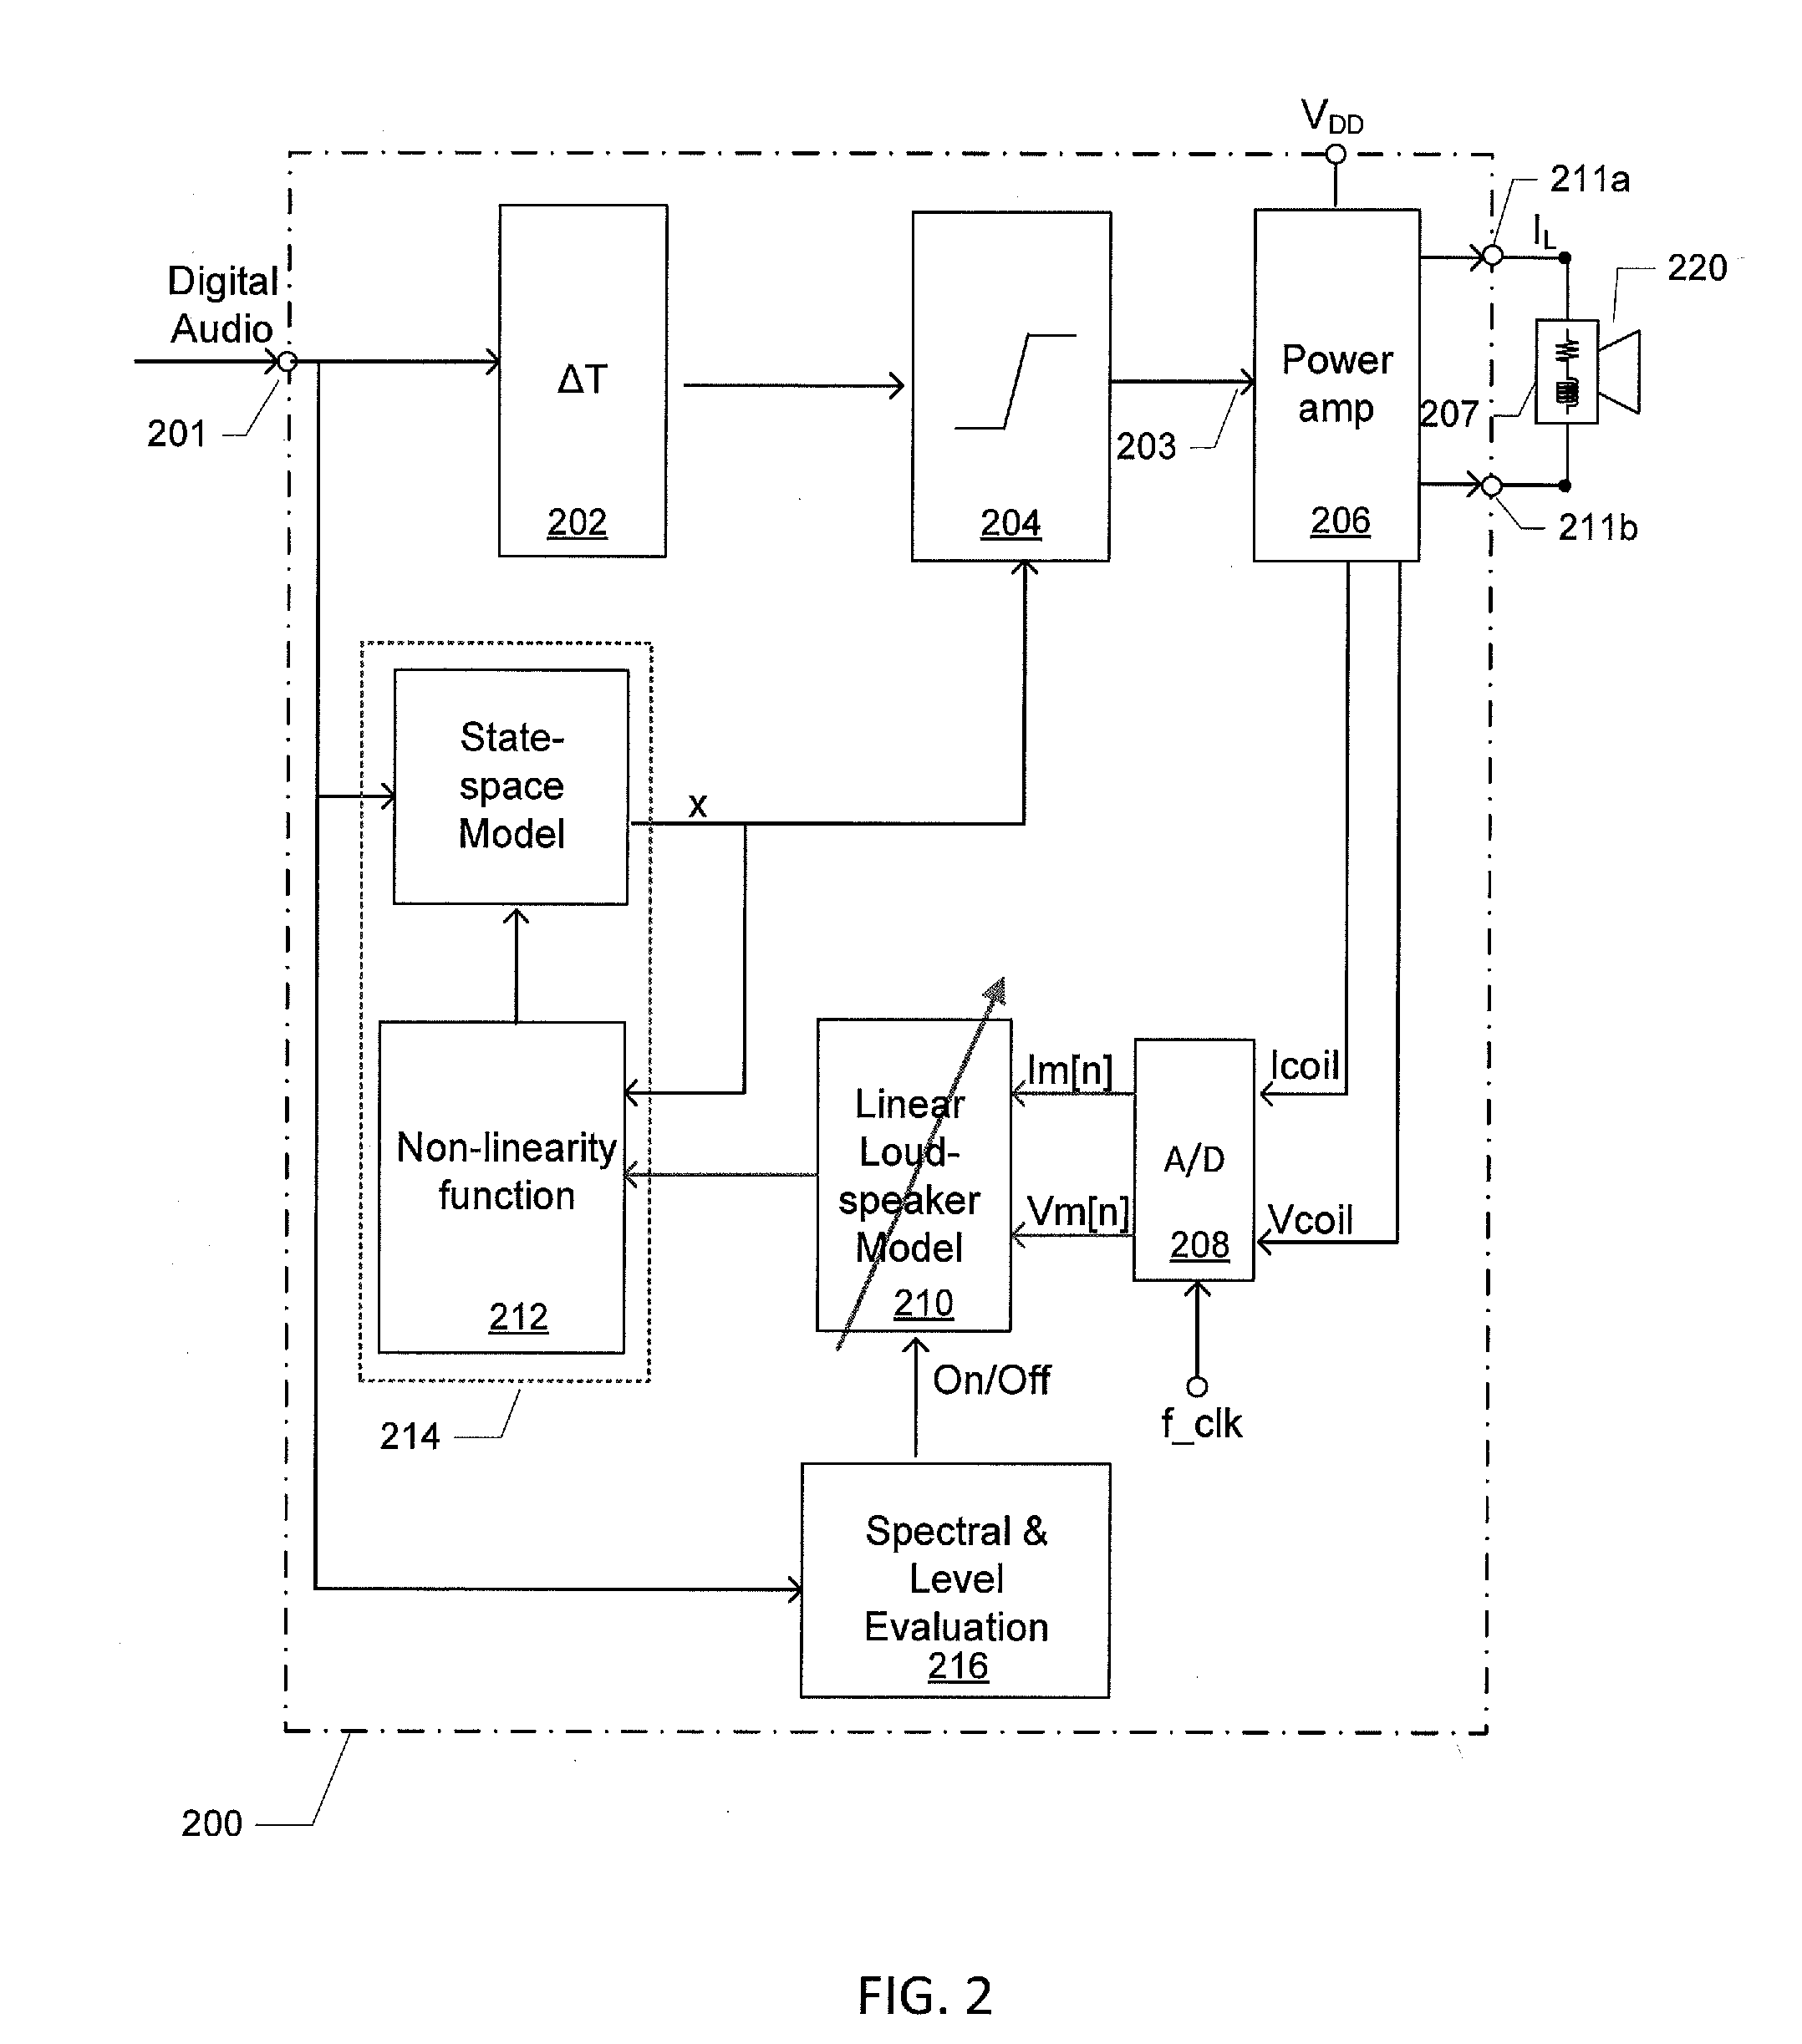 Method of estimating diaphragm excursion of a loudspeaker